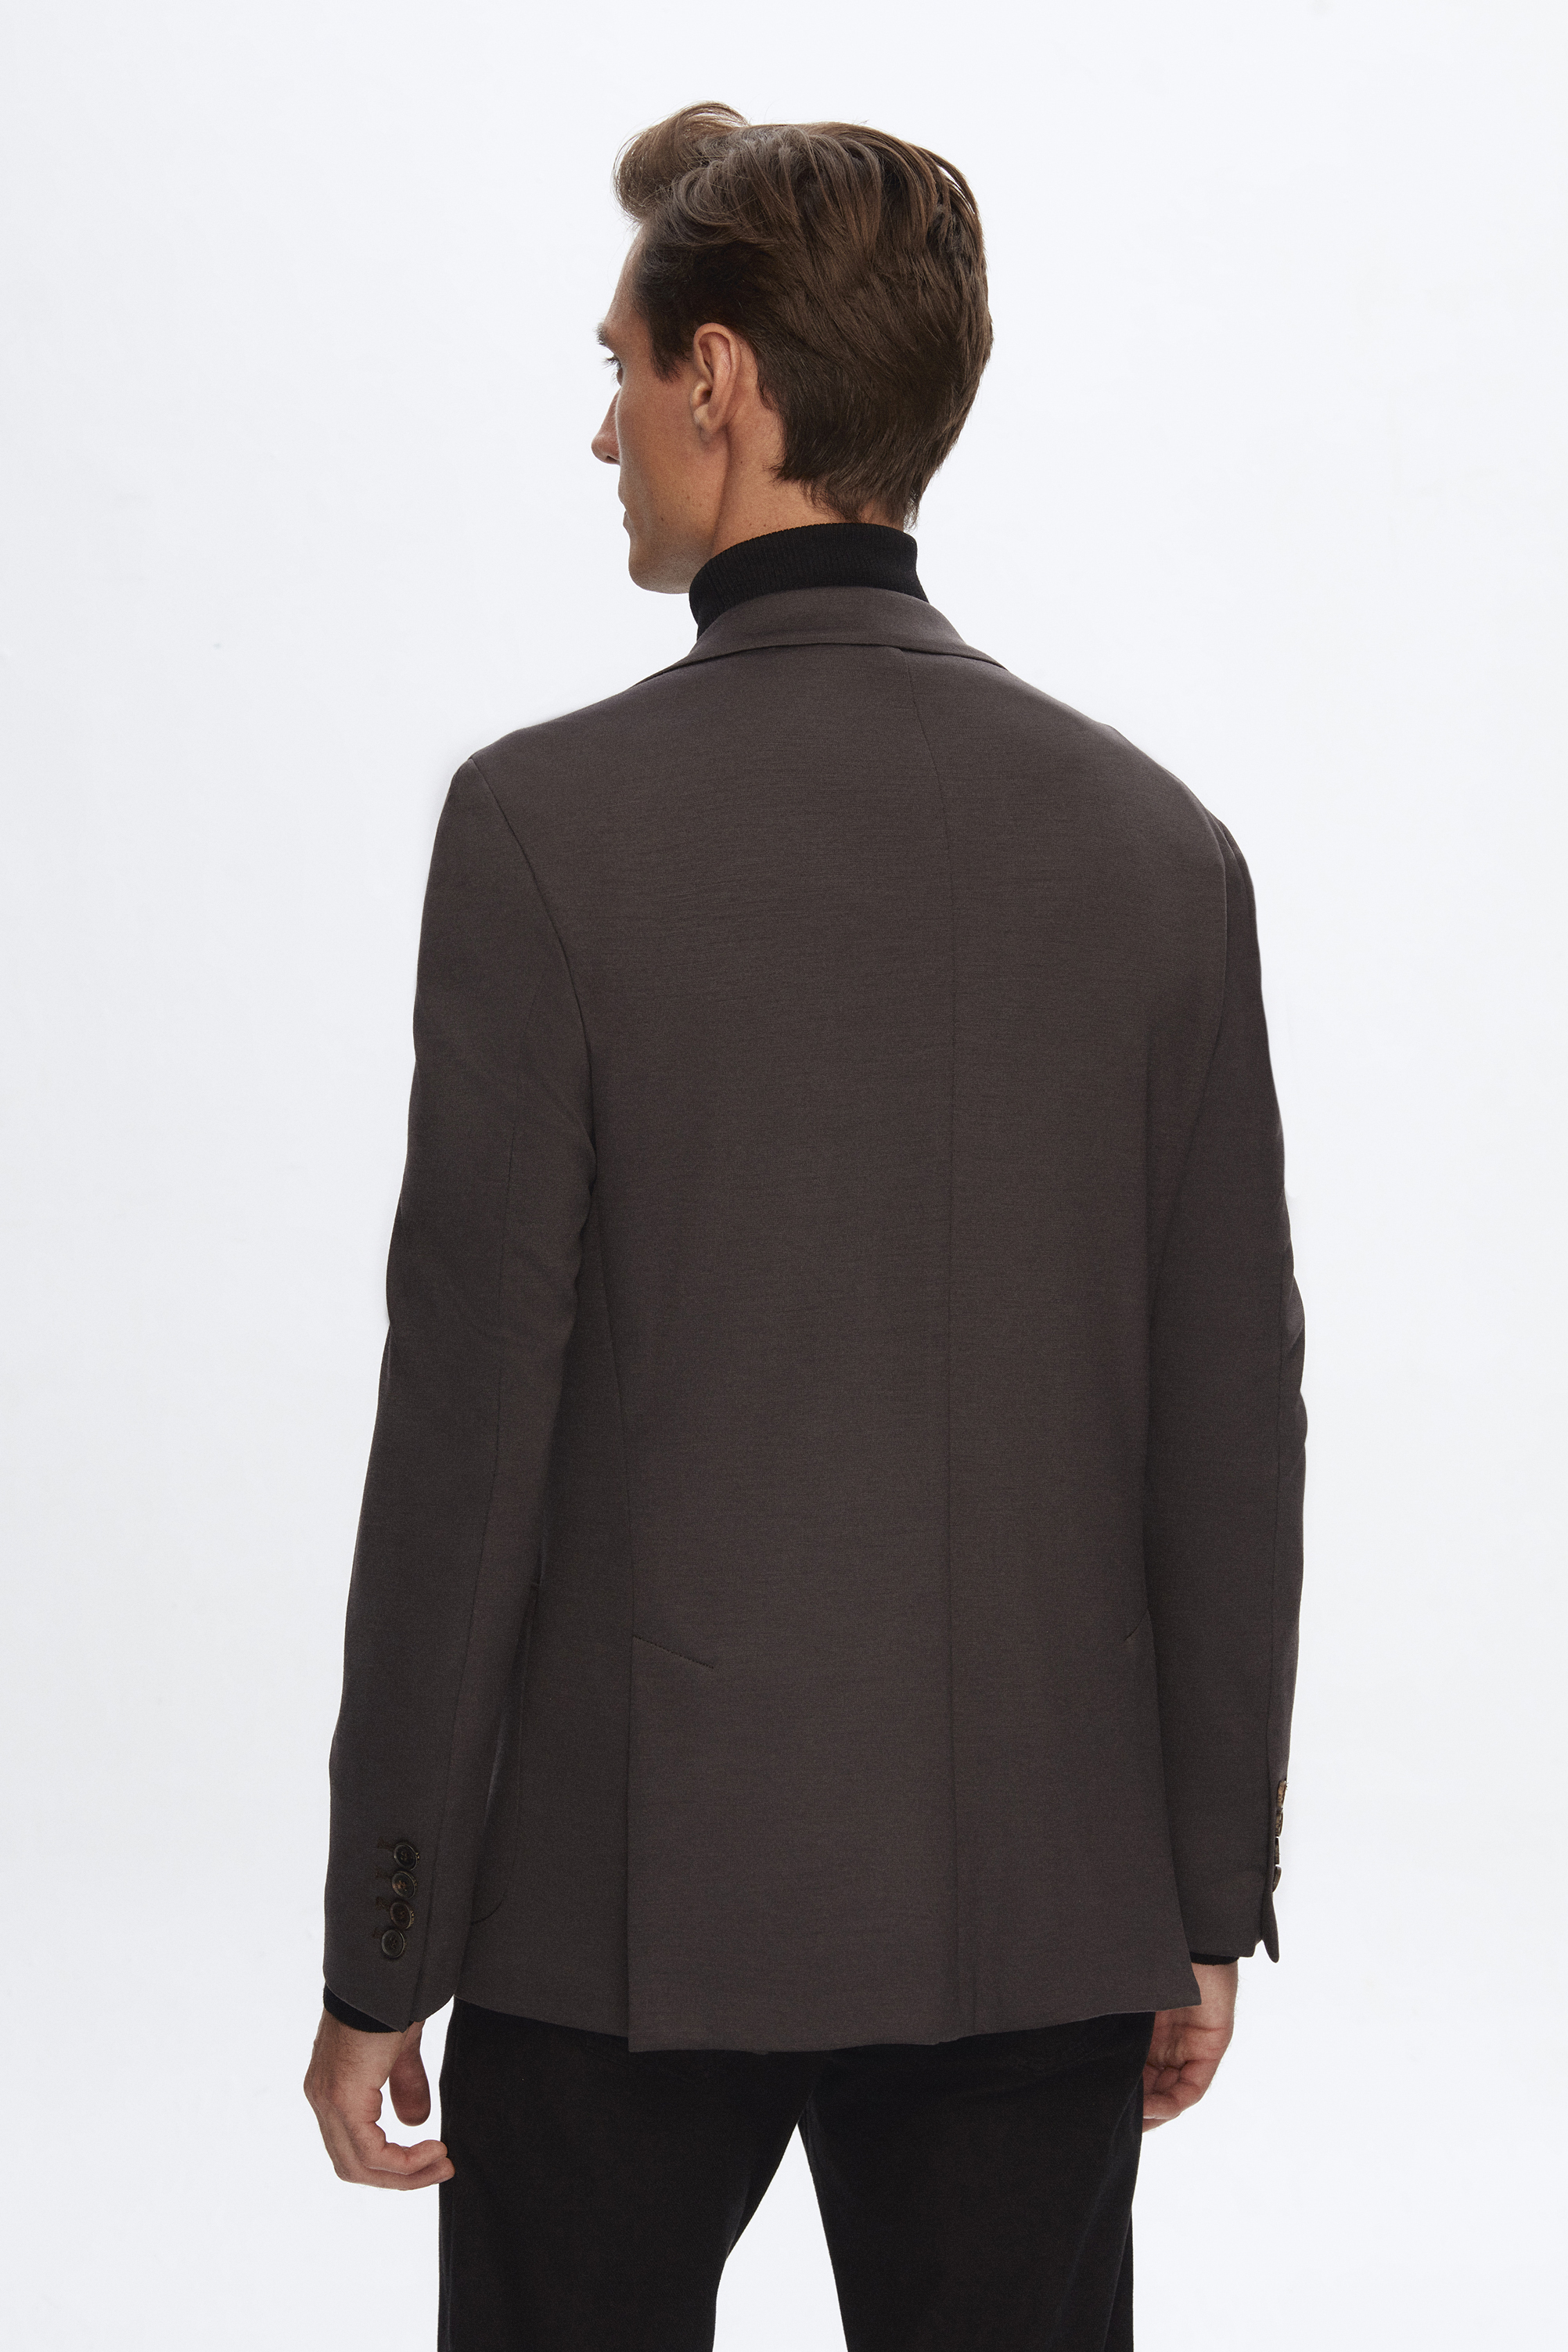 Damat Tween Damat Slim Fit Kahverengi Melanj Kumaş Ceket. 5